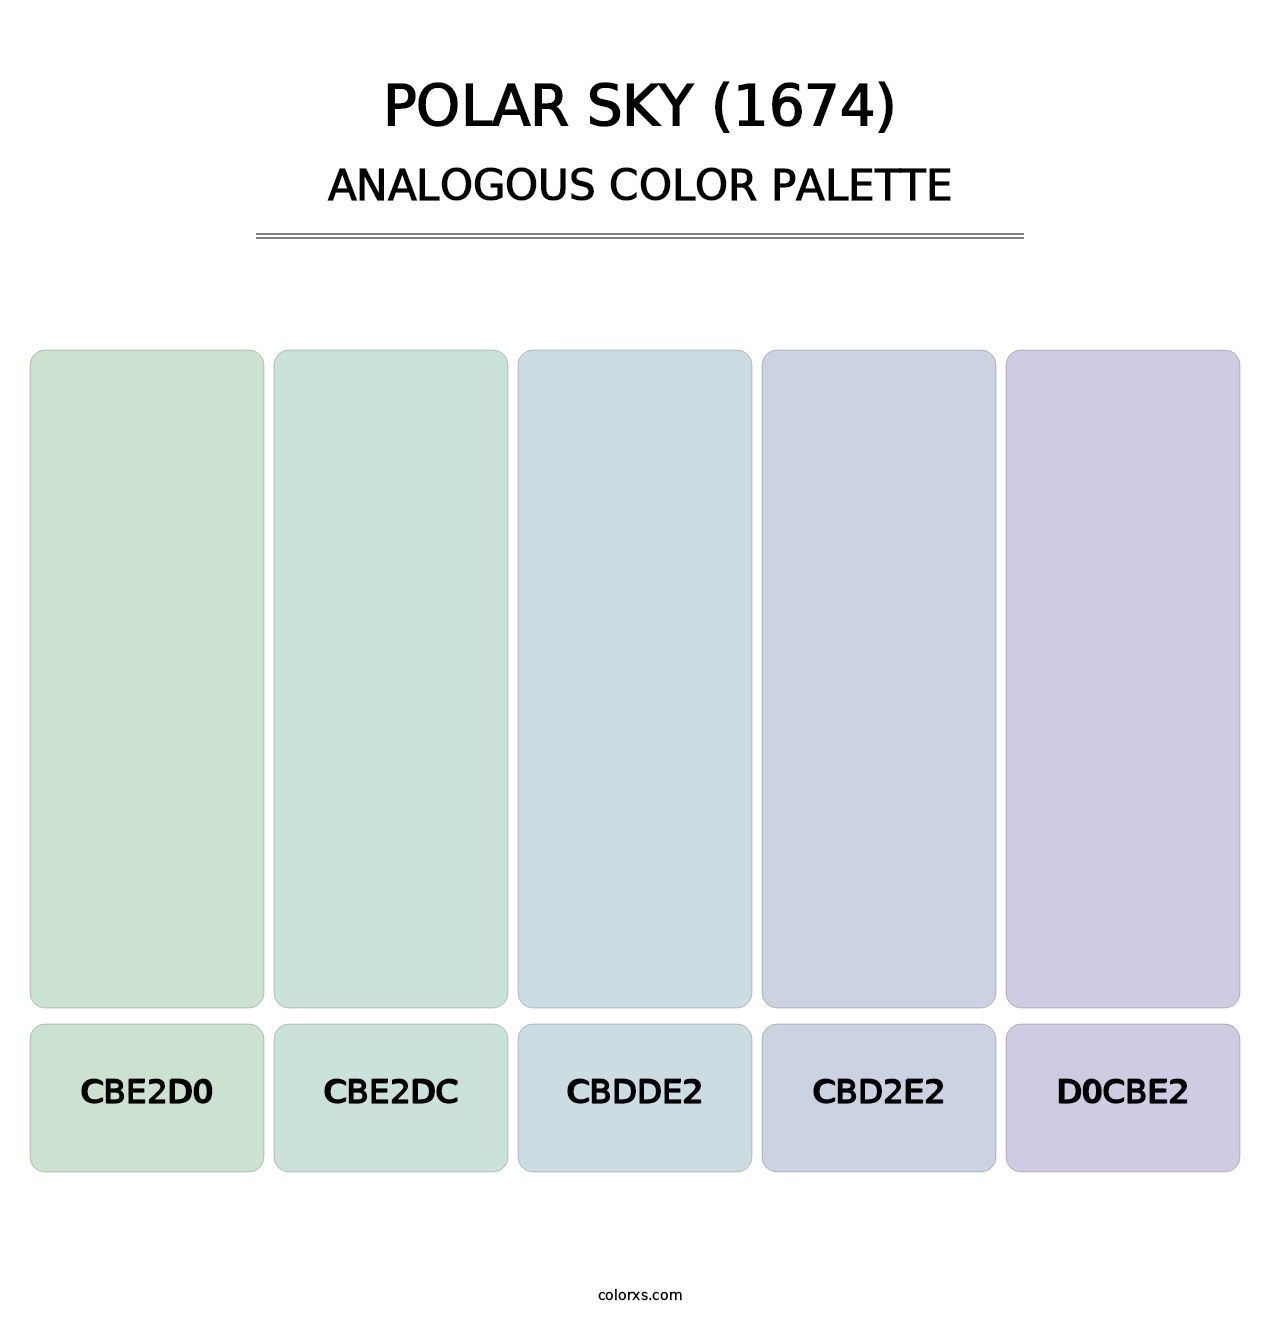 Polar Sky (1674) - Analogous Color Palette